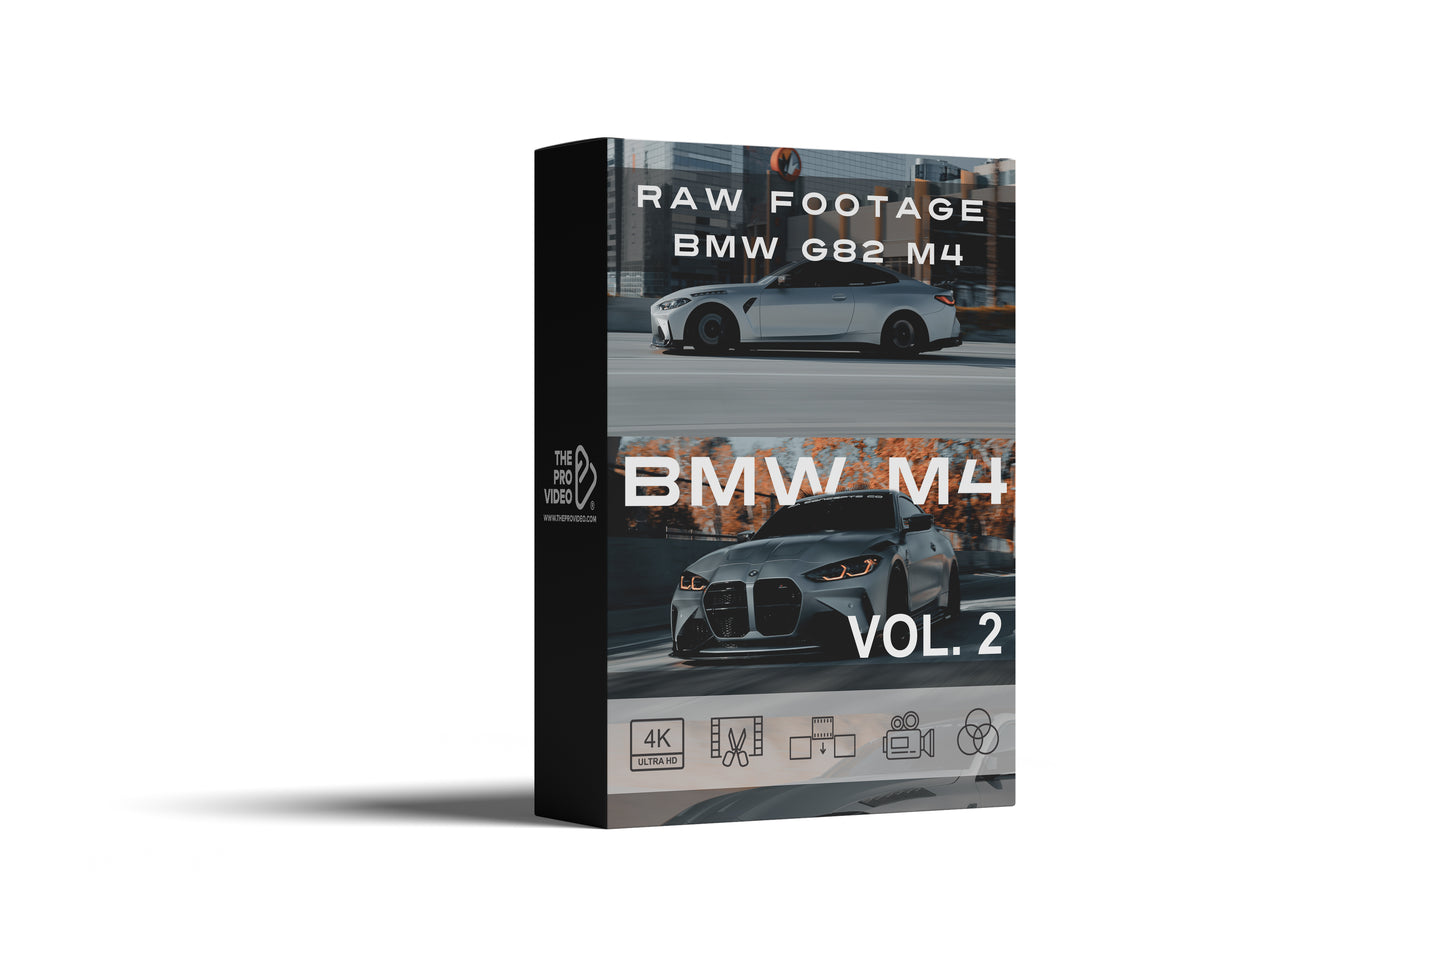 Combo: Sound FX, LUTs & BMW M4